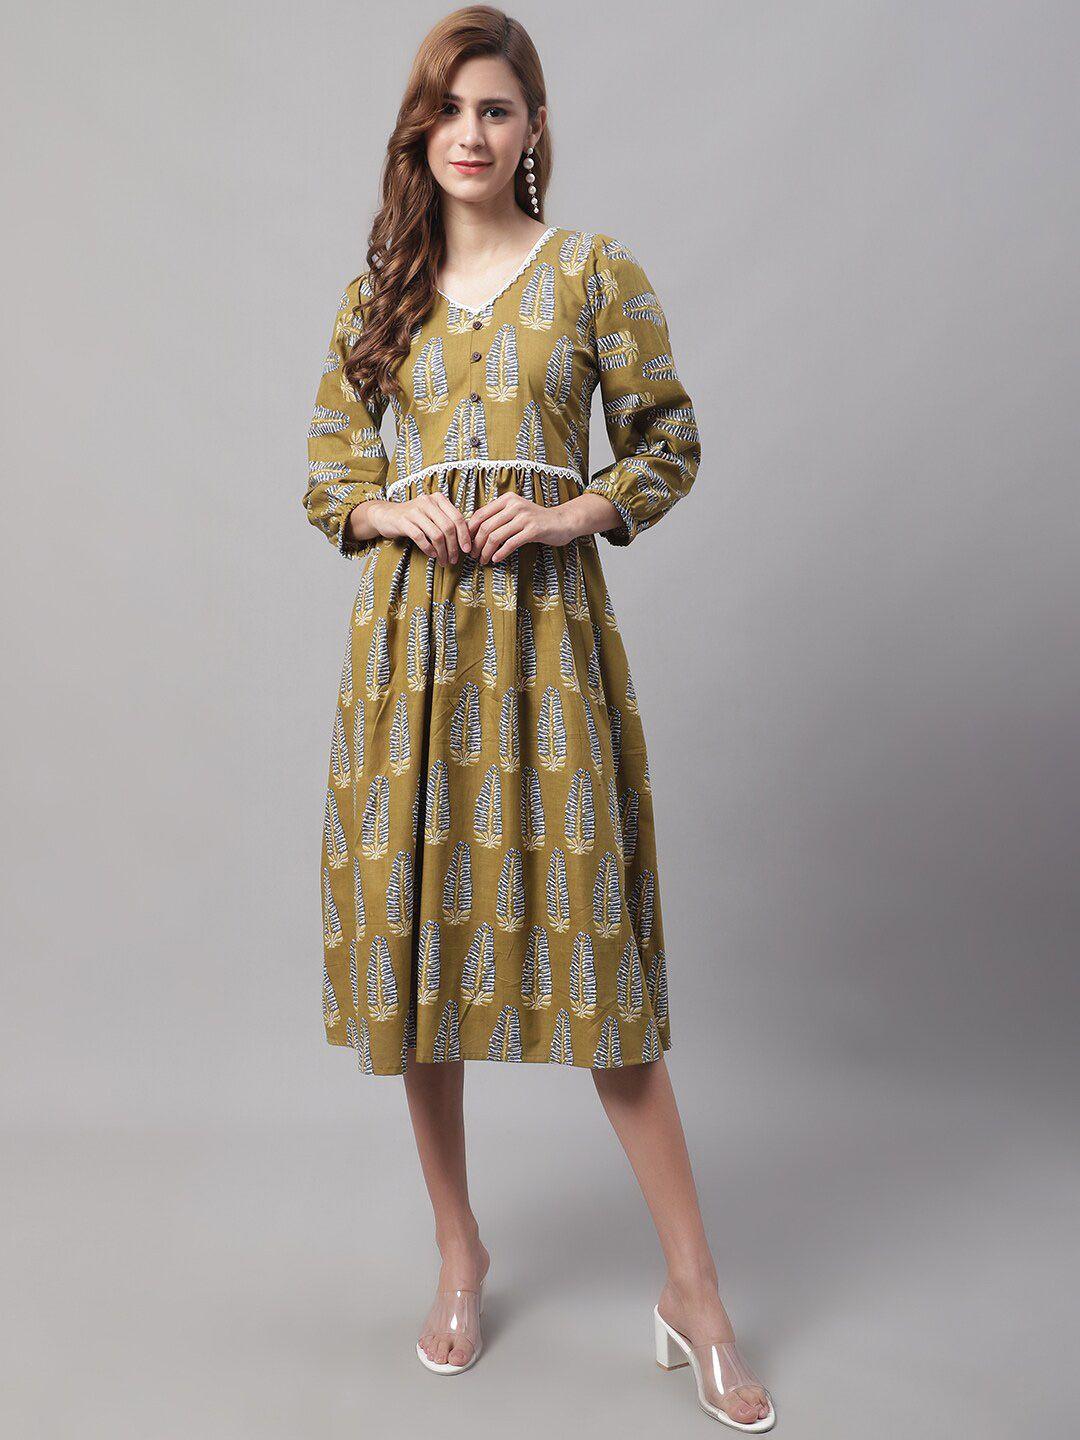 enchanted drapes ethnic motifs a-line midi pure cotton dress